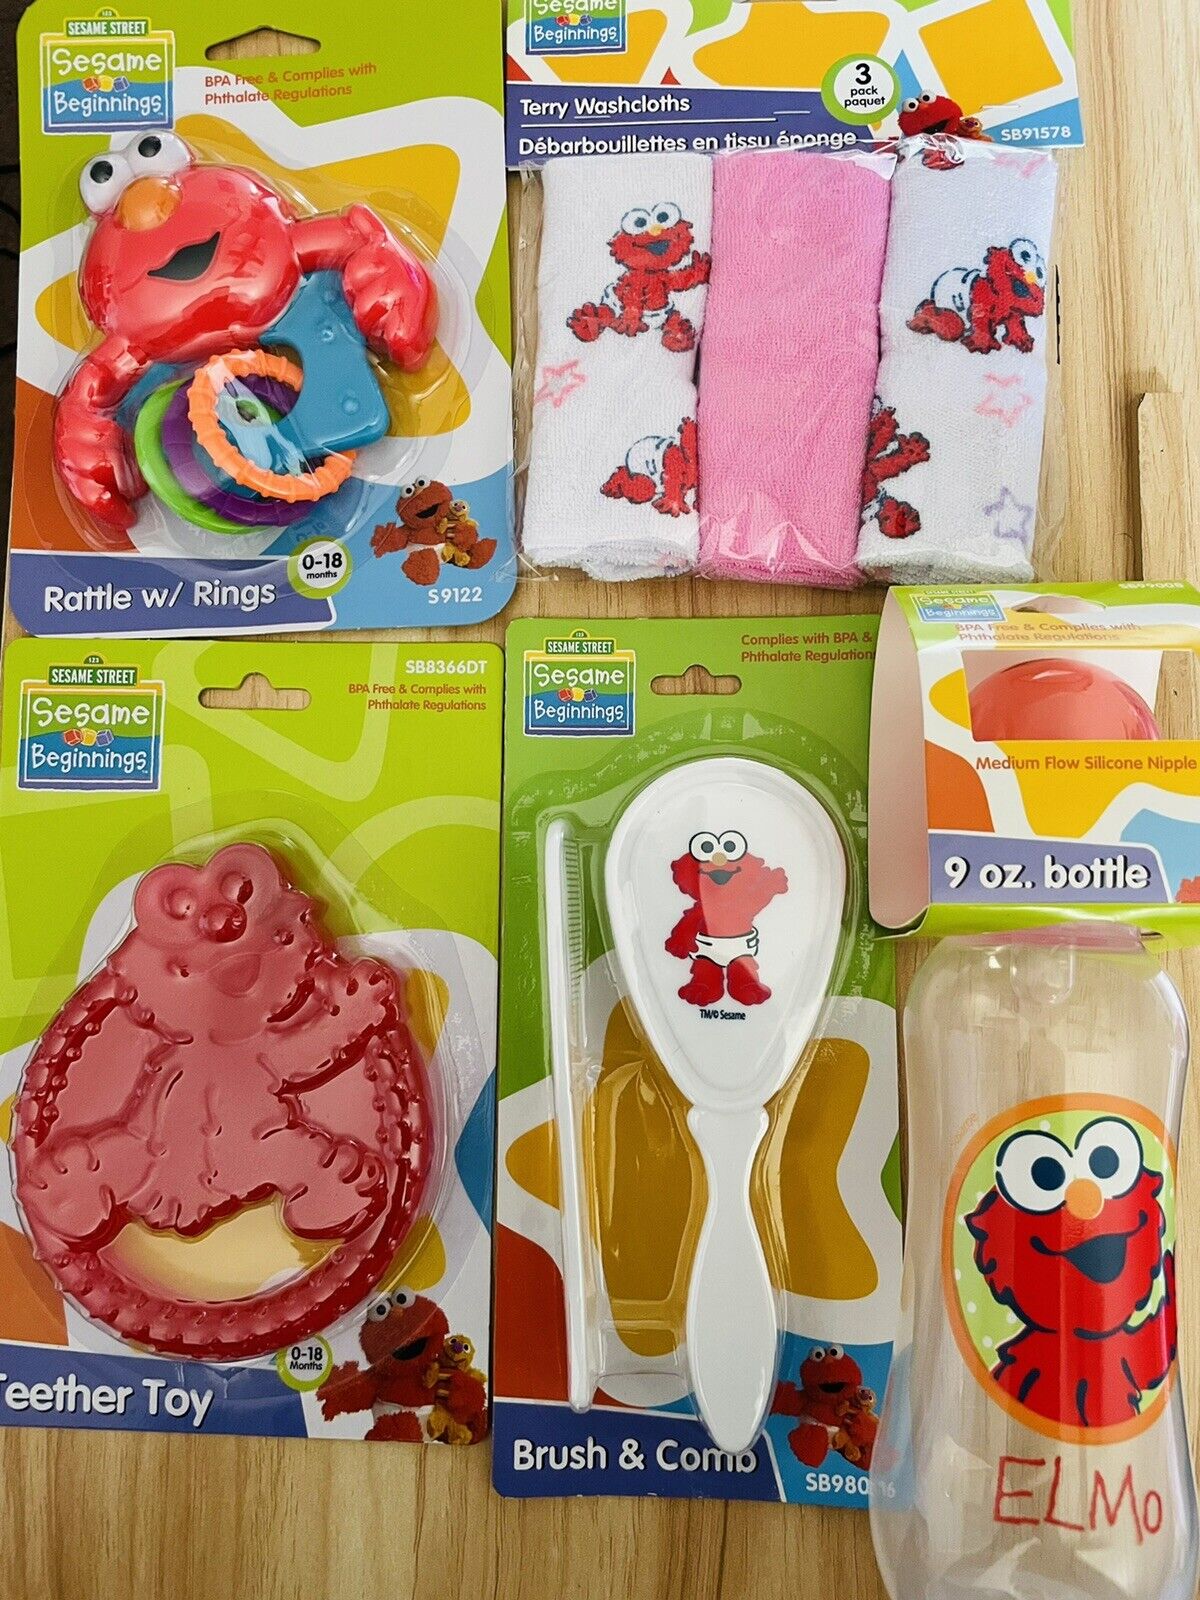 Sesame Street Elmo Gift Bundle (5 items) Baby Shower Newborn Sesame Street